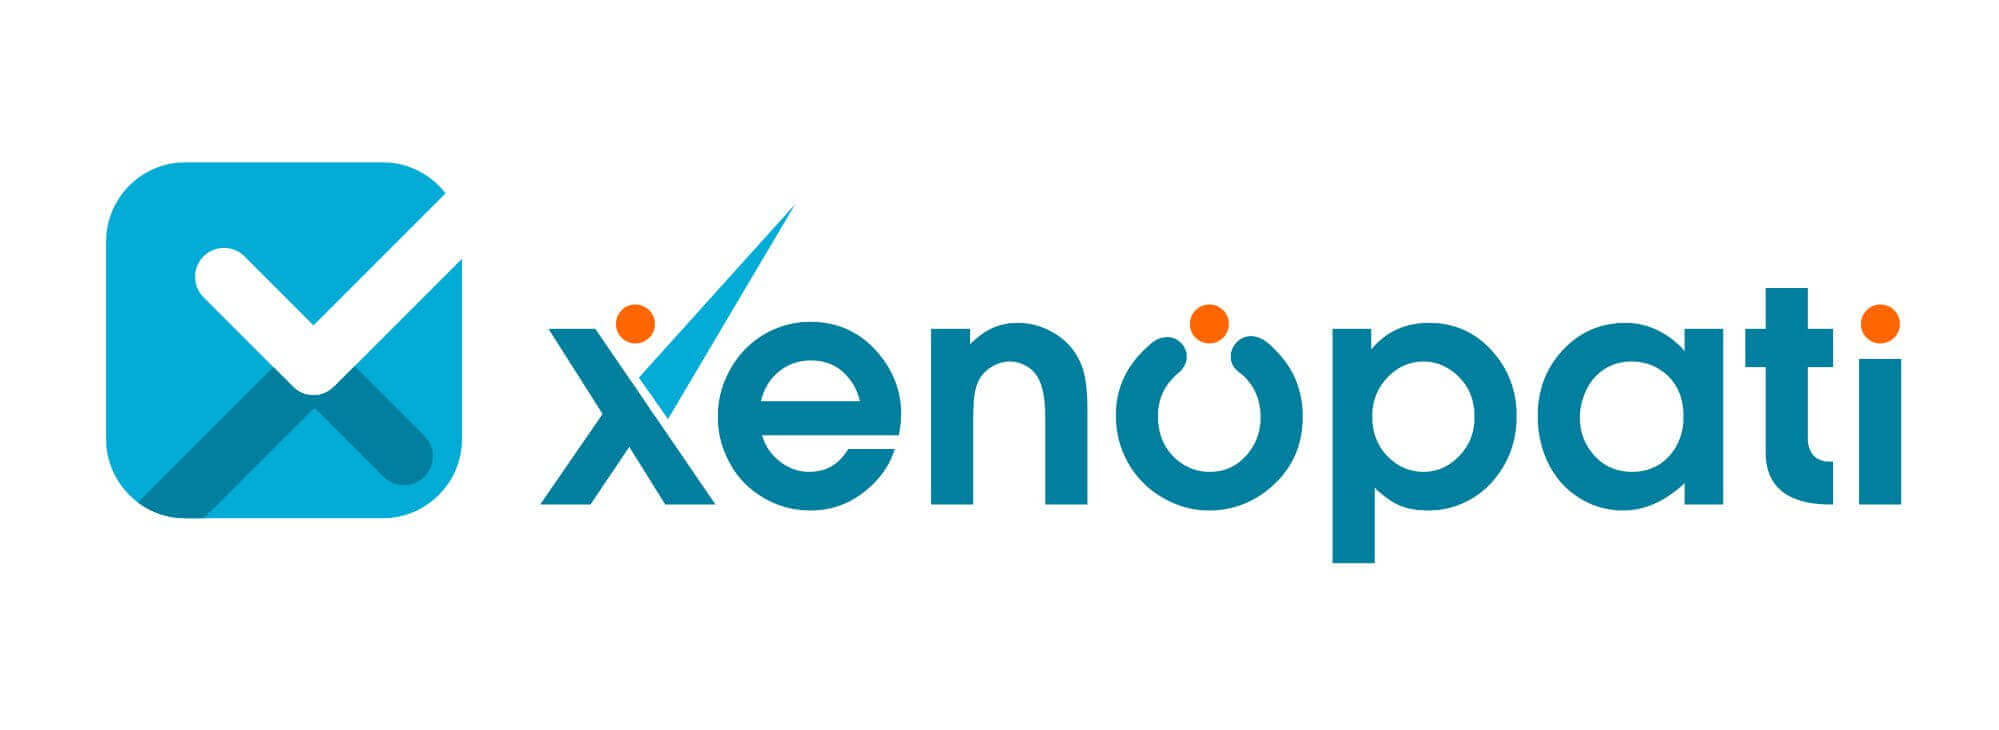 Xenopati – Digital transformation partner for business growth